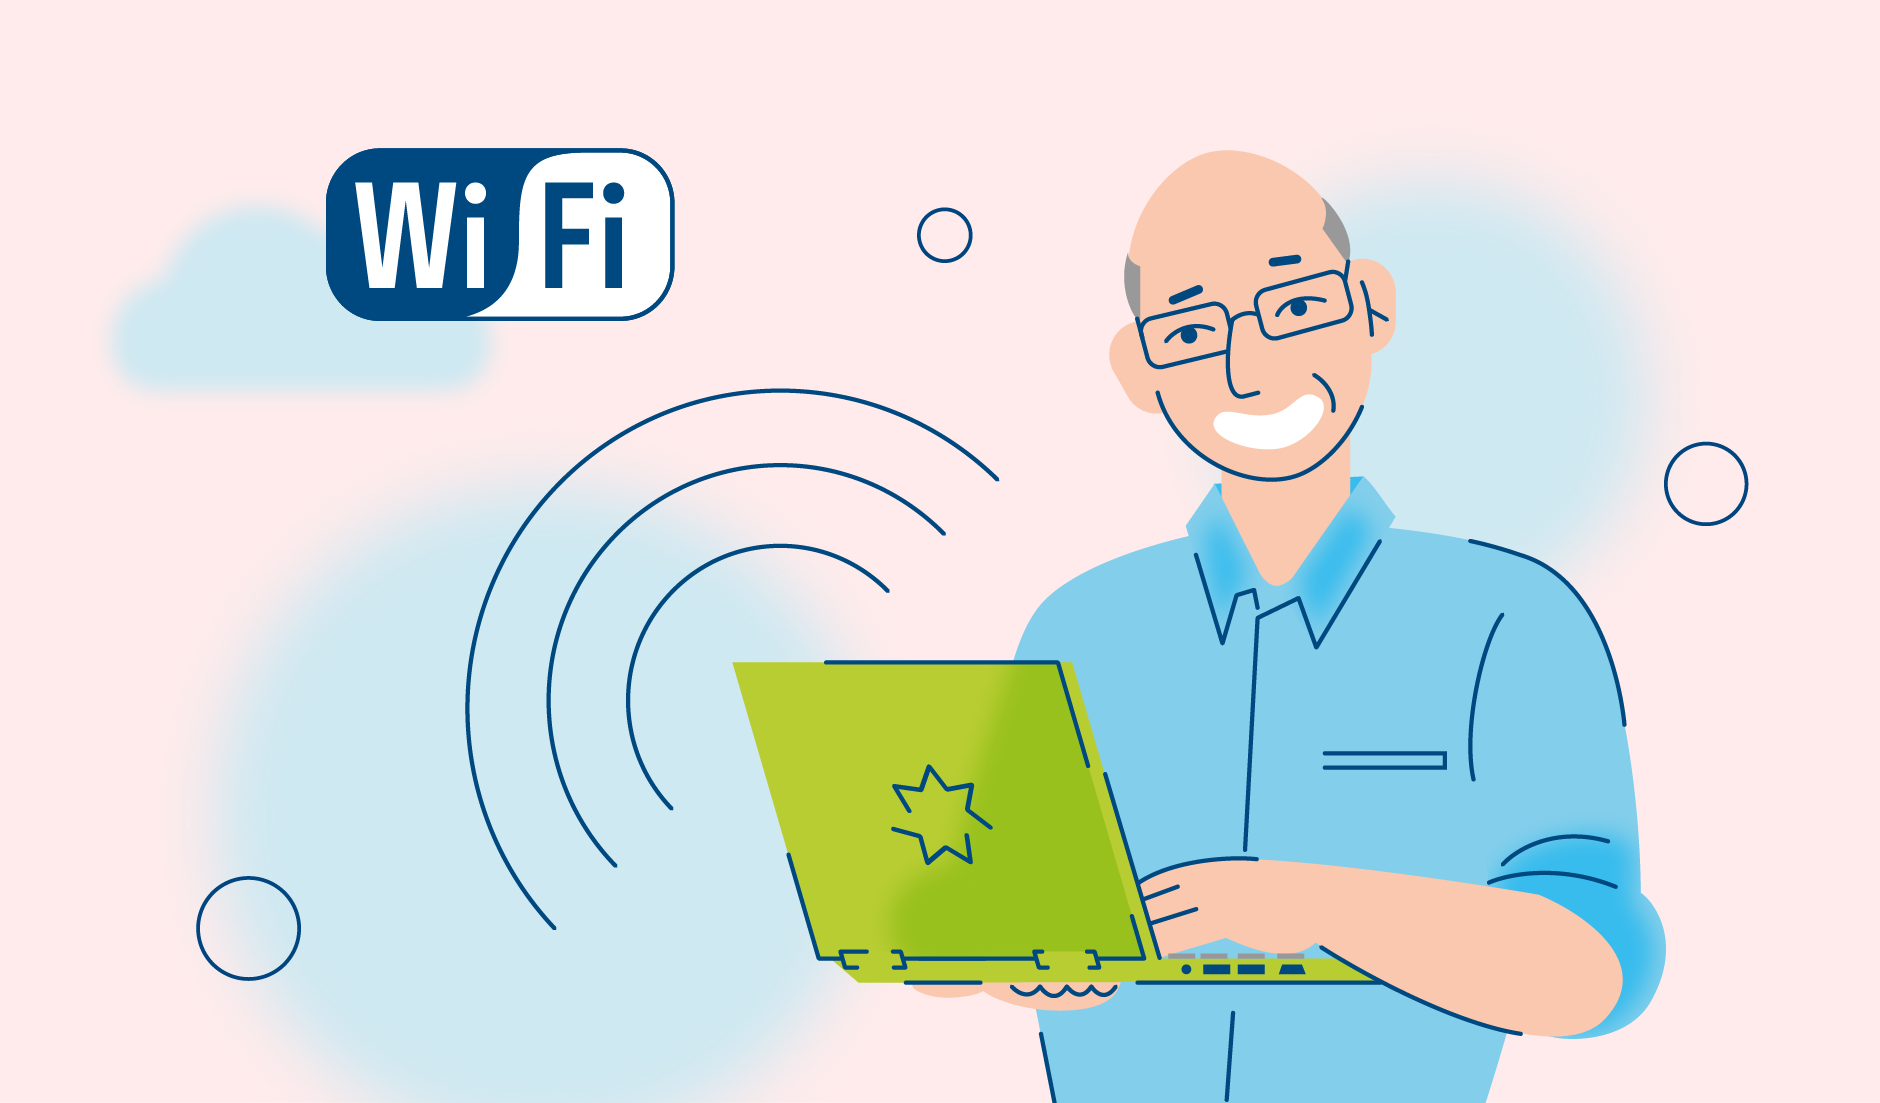 Wi-Fi подключён на телефоне, но нет доступа к интернету, а на ноутбуке Wi-Fi подключён, что делать?